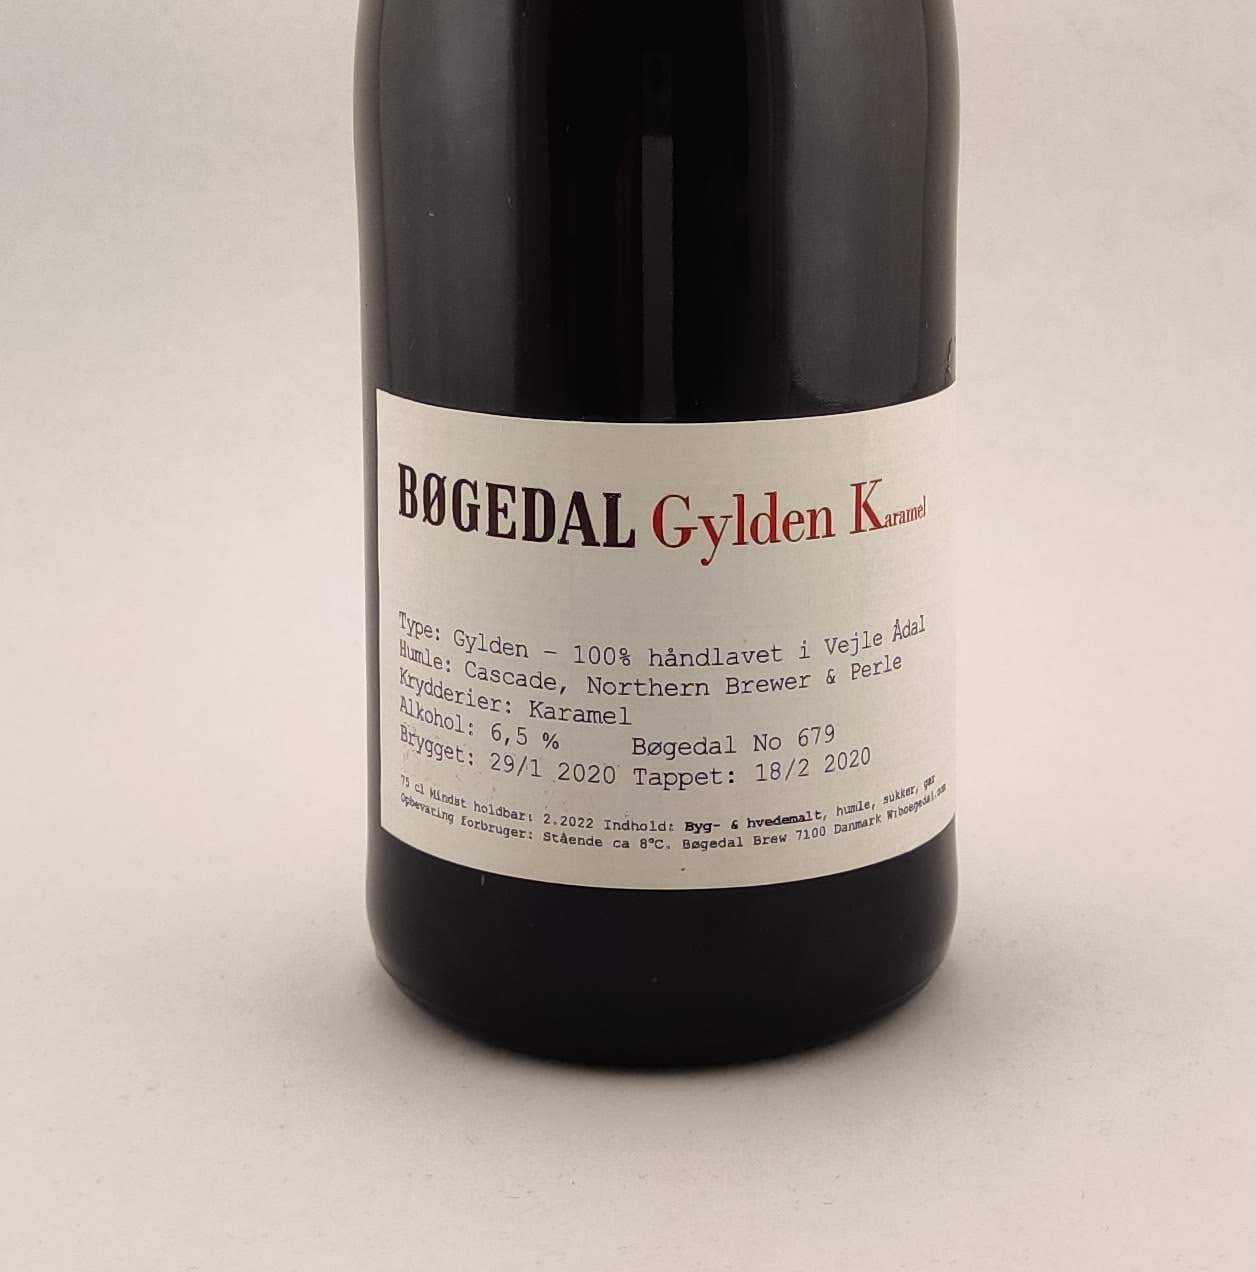 679-boegedal-gylden-karamel-etiket